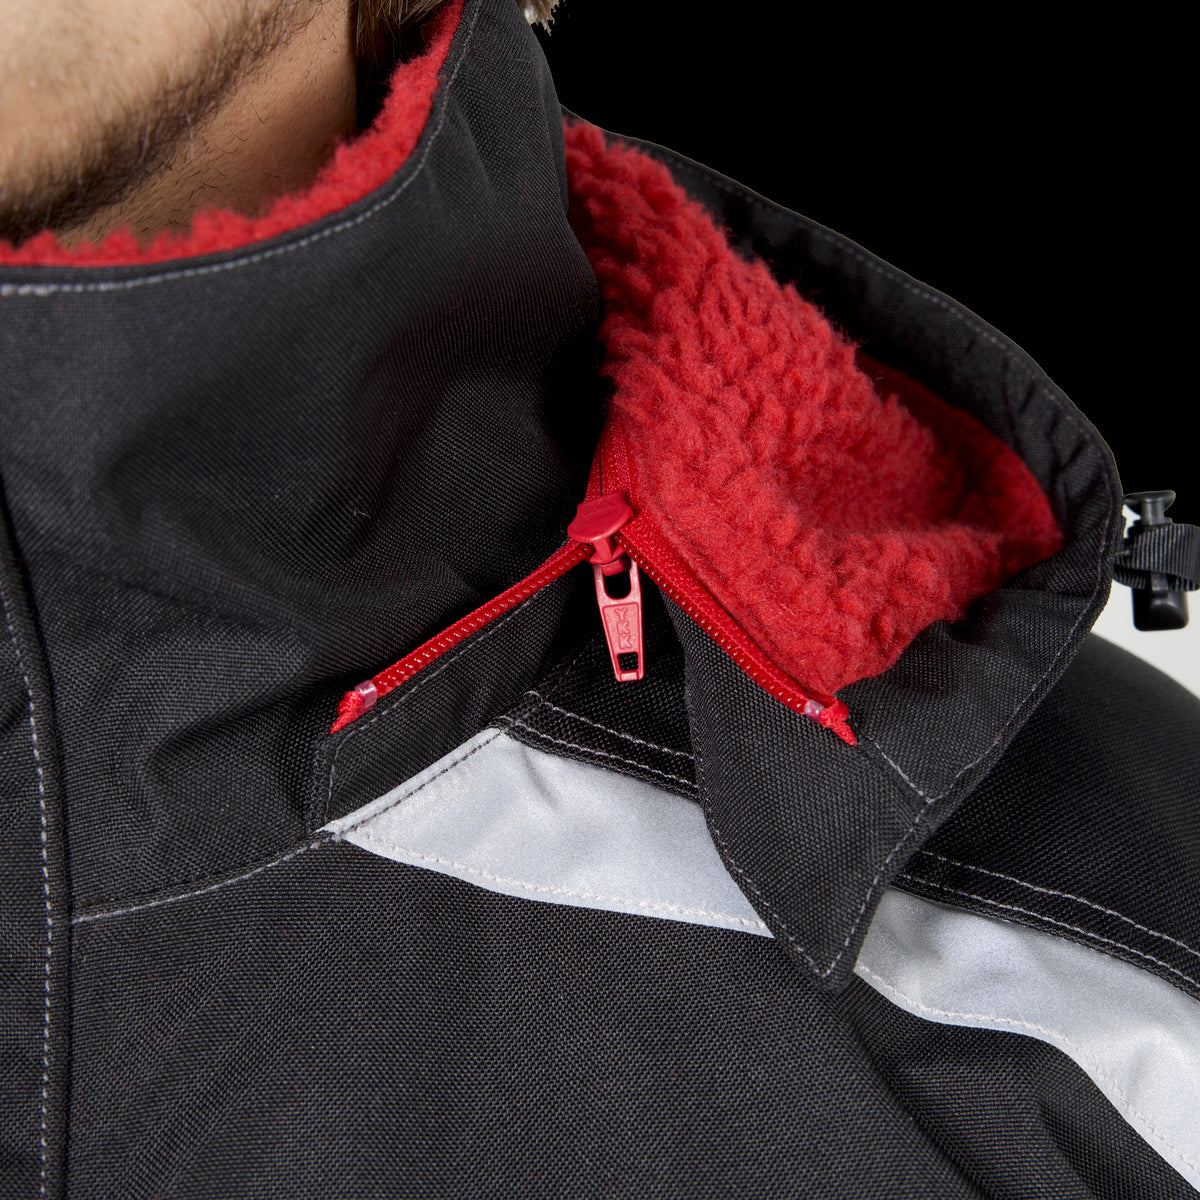 Eskimo Roughneck Jacket for Men - Black/Red - XL